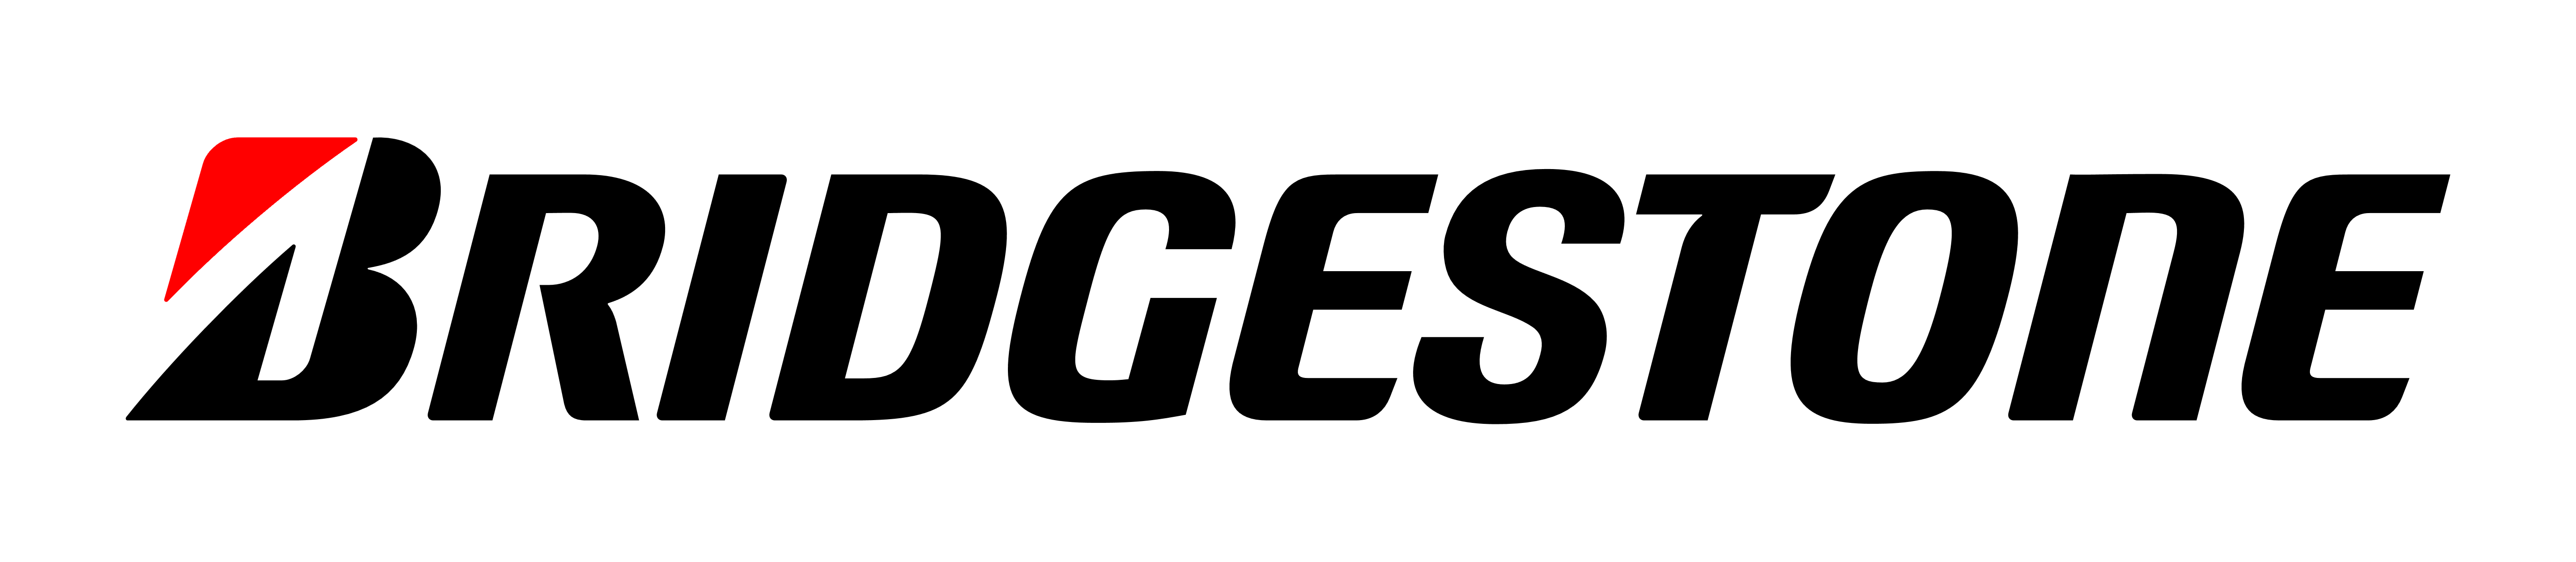 Logo Bridgestone Png